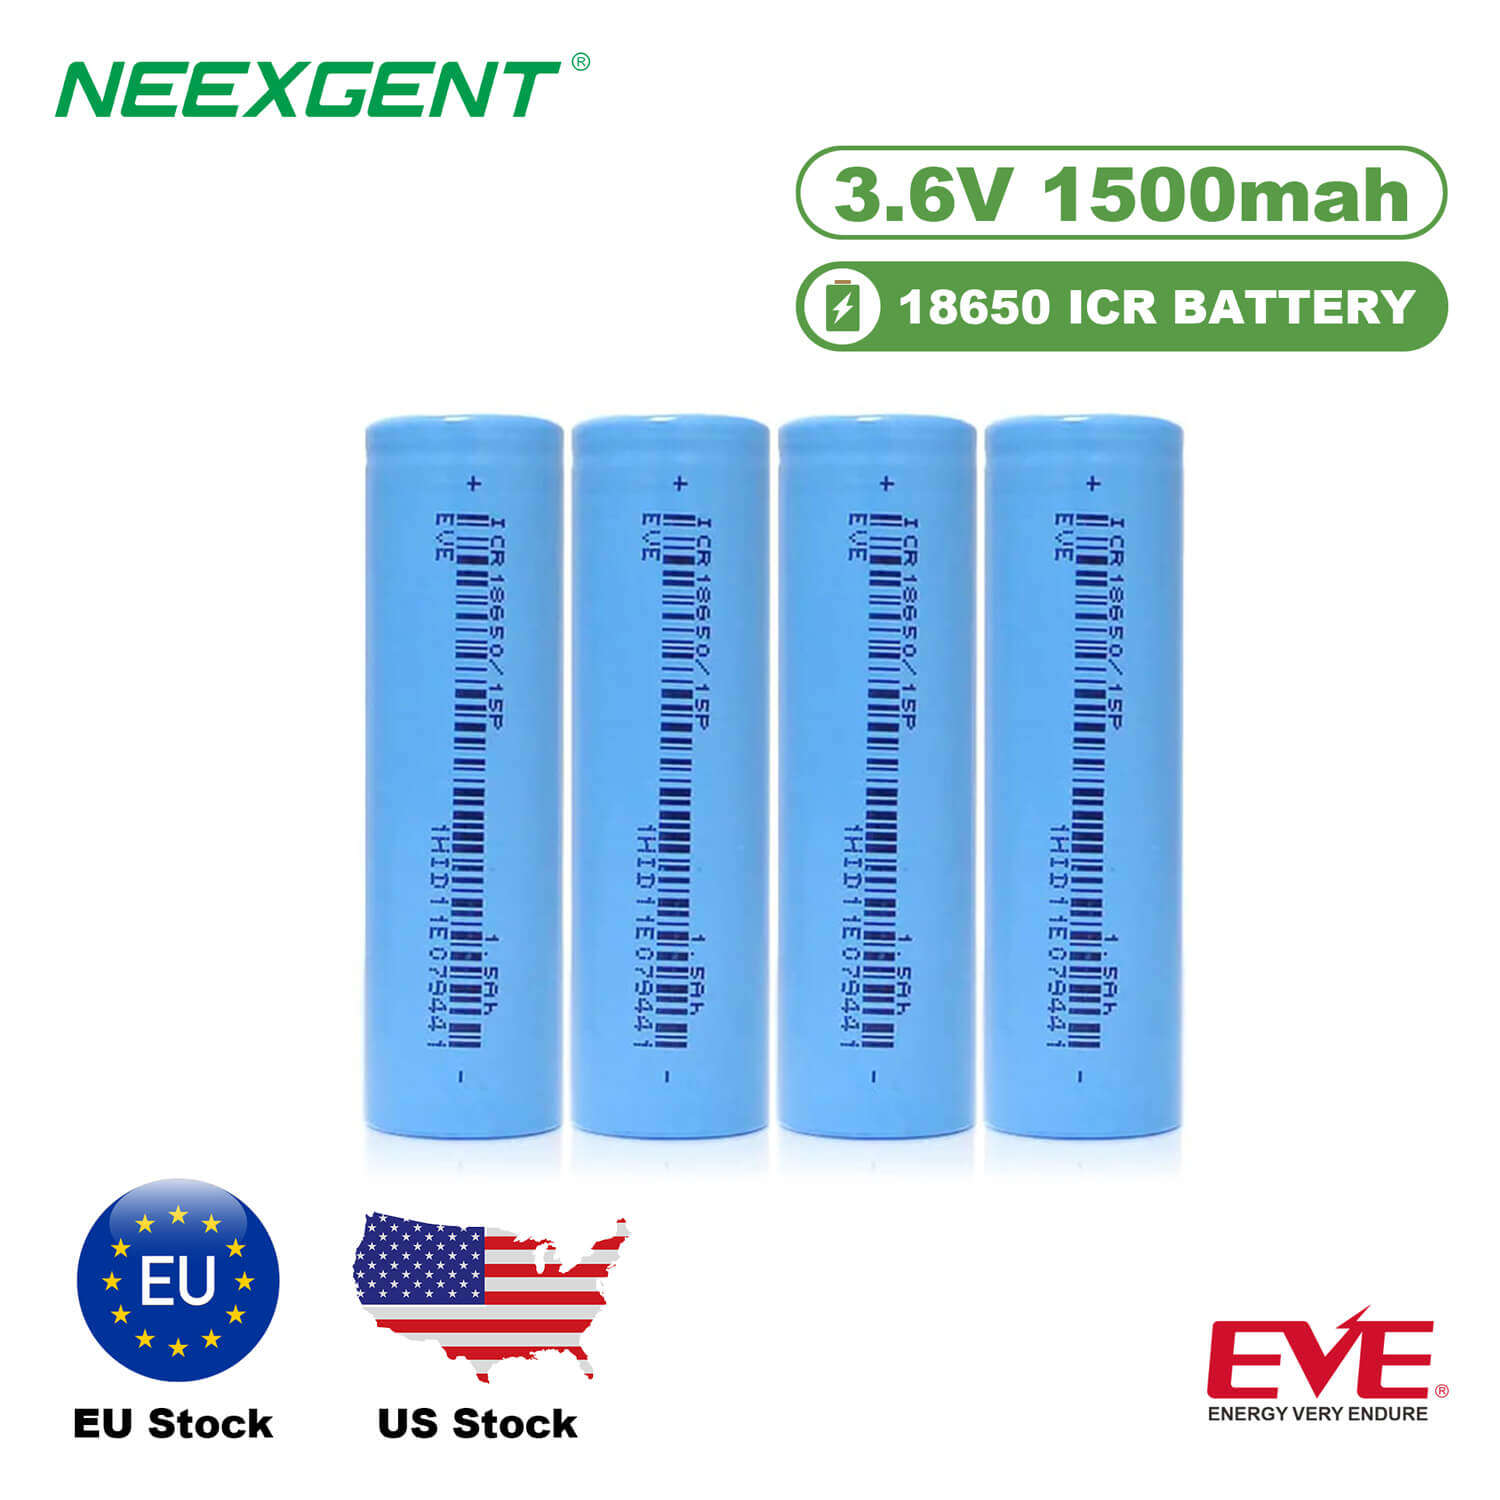 Neexgent EVE 18650 15P 1500mah 3.6V ICR Battery